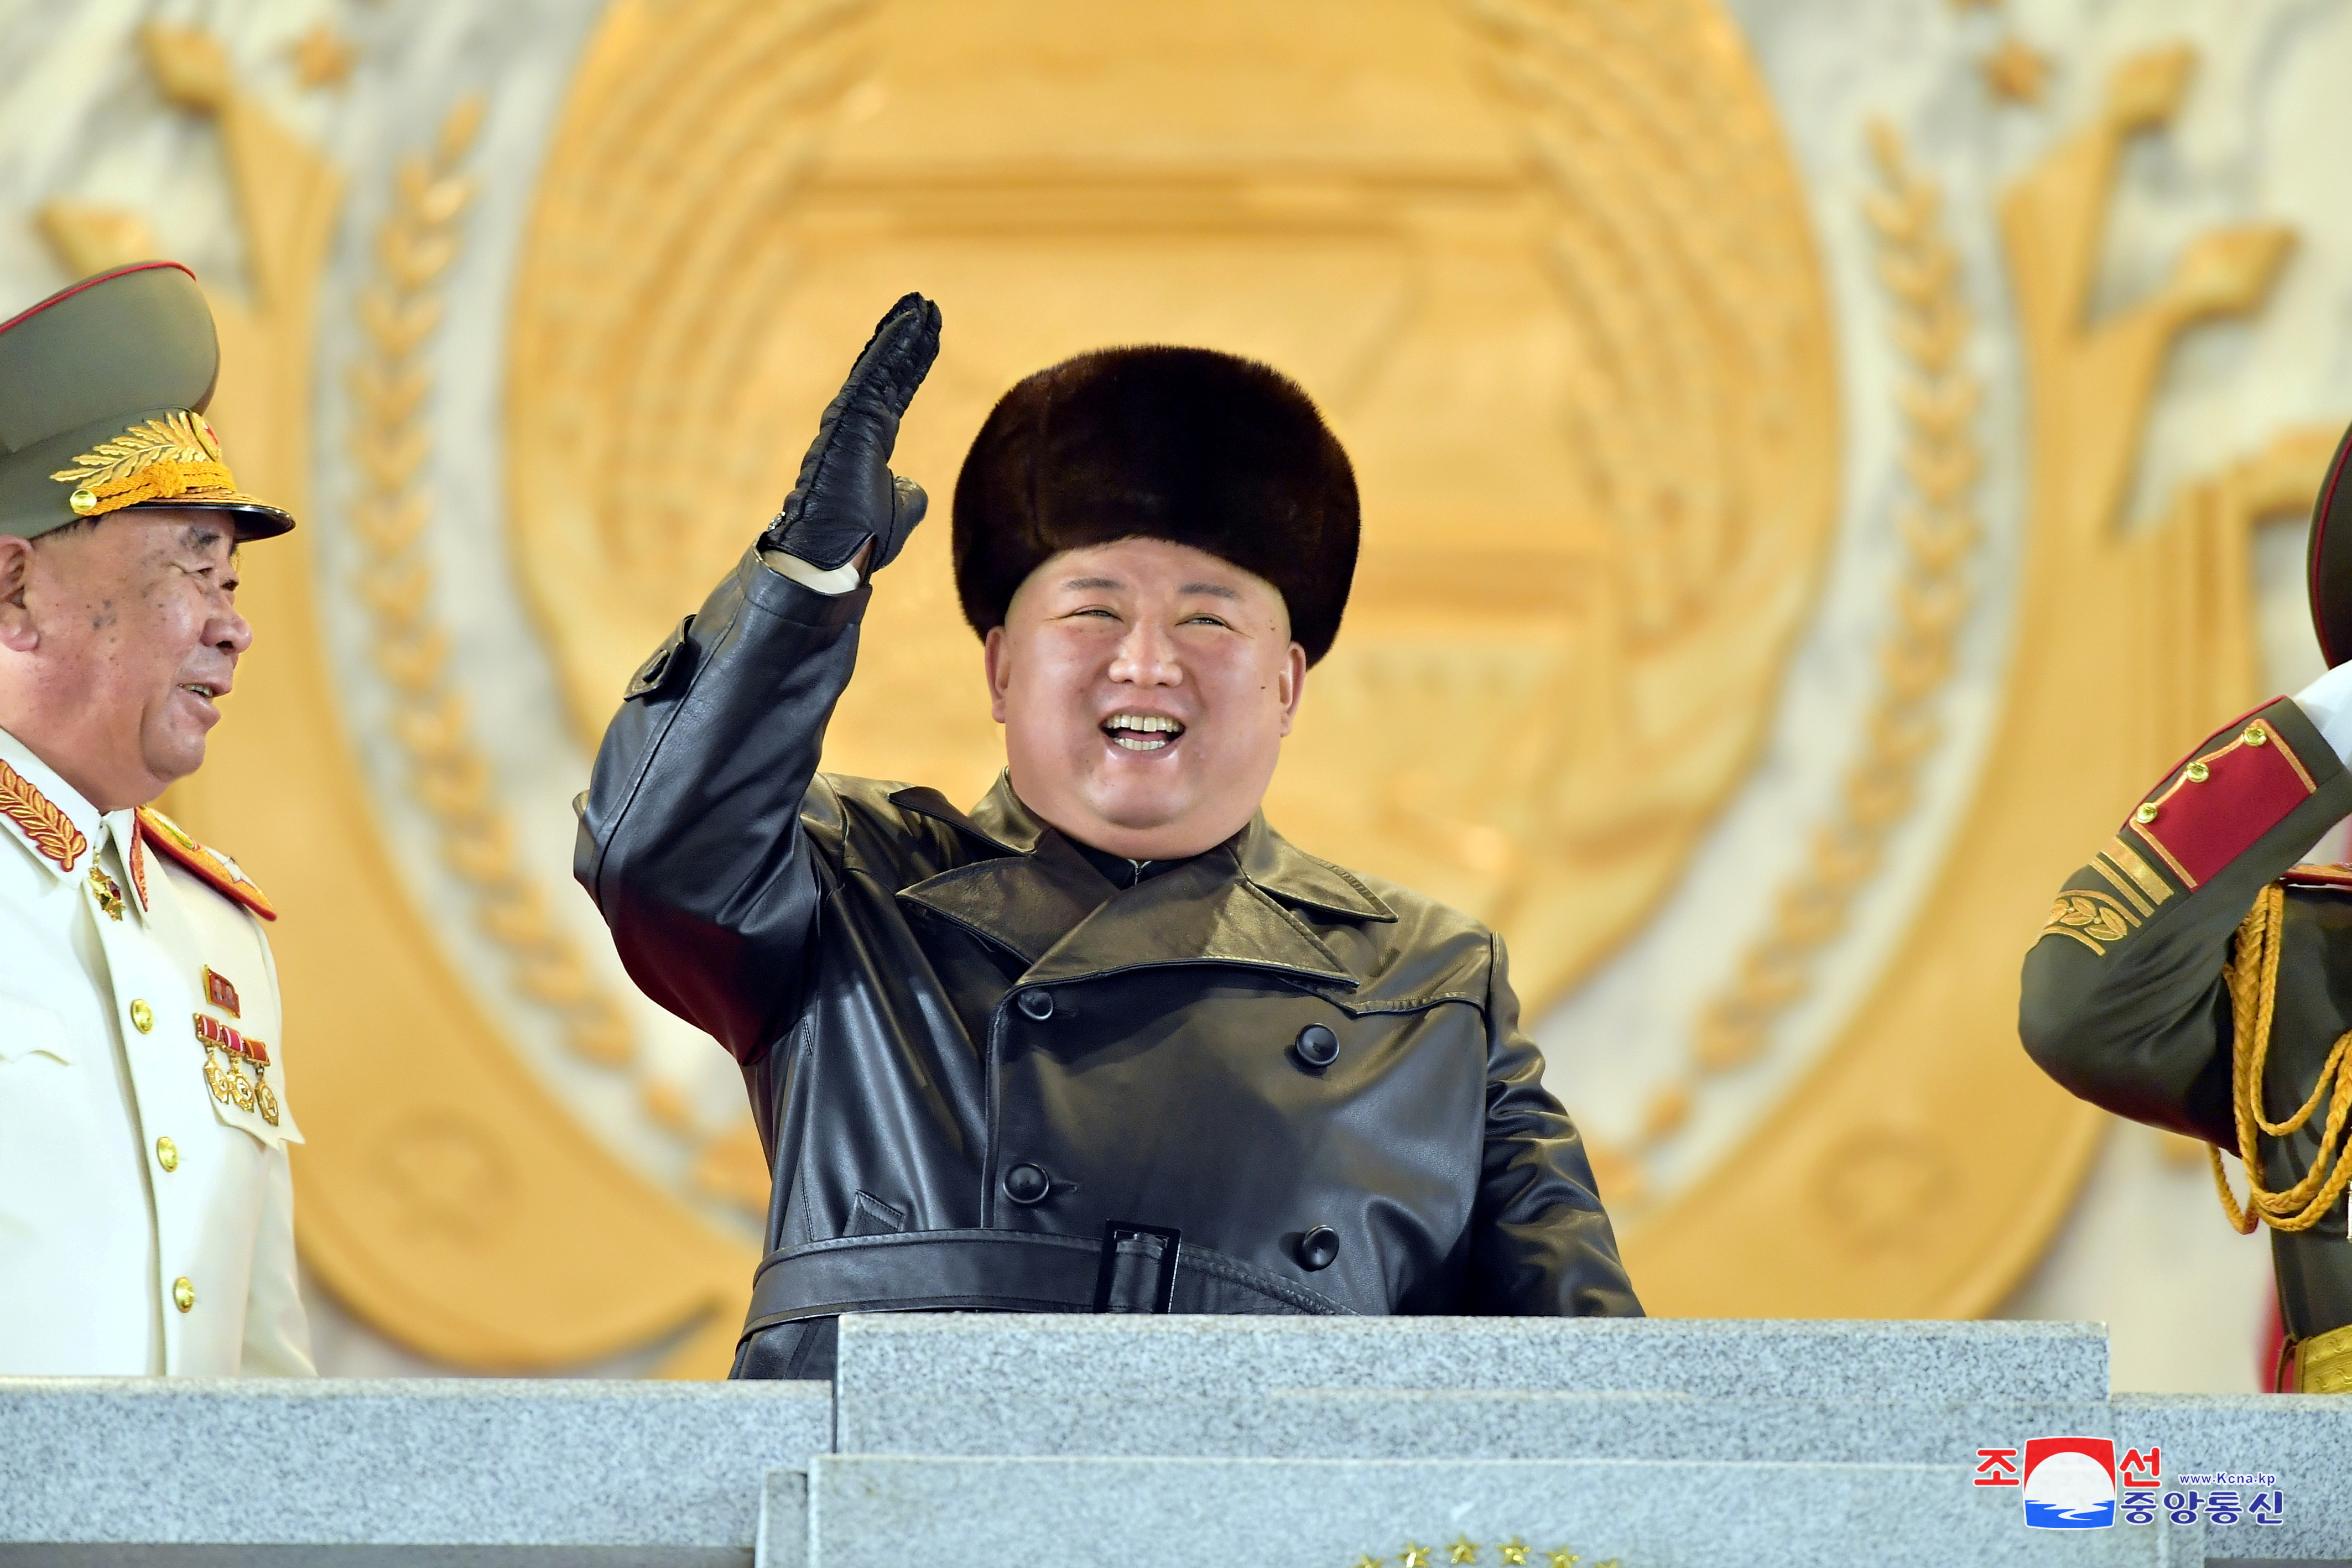 North Korea Pornography - N.Korea cracks down on foreign media, speaking styles | Reuters